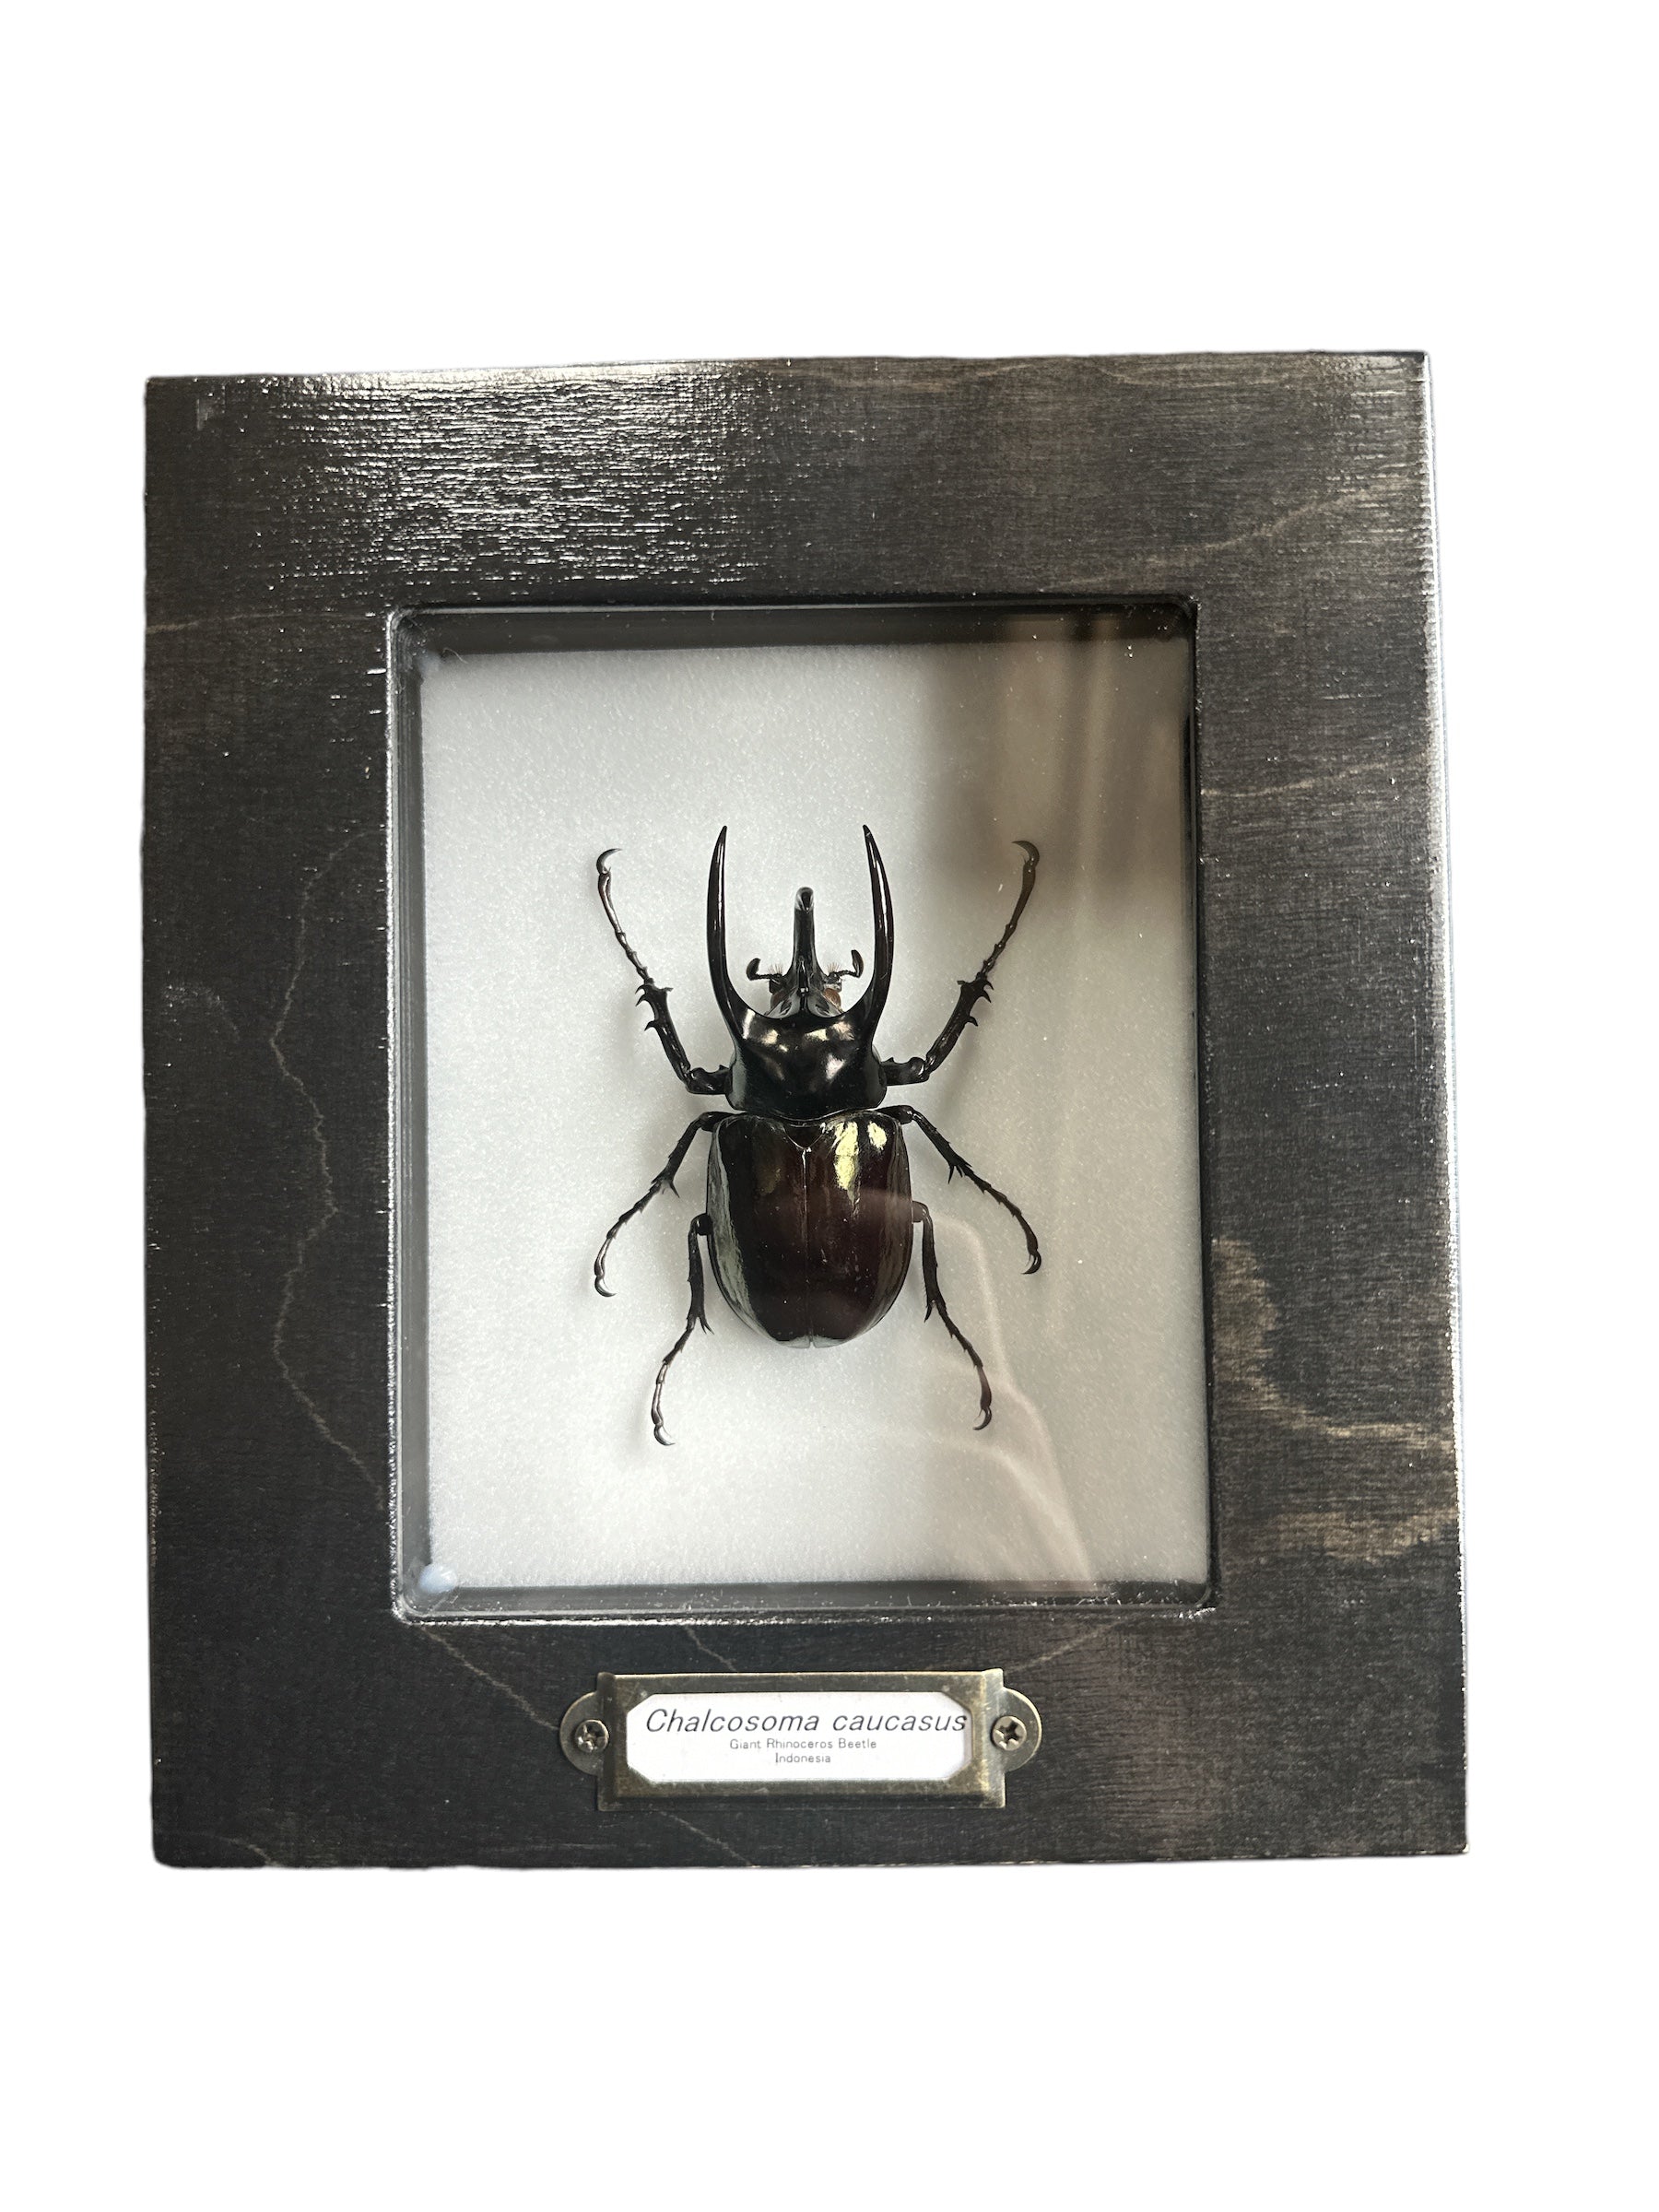 Giant Rhino Beetle (Chalcosoma caucasus) - 4x5" Frame